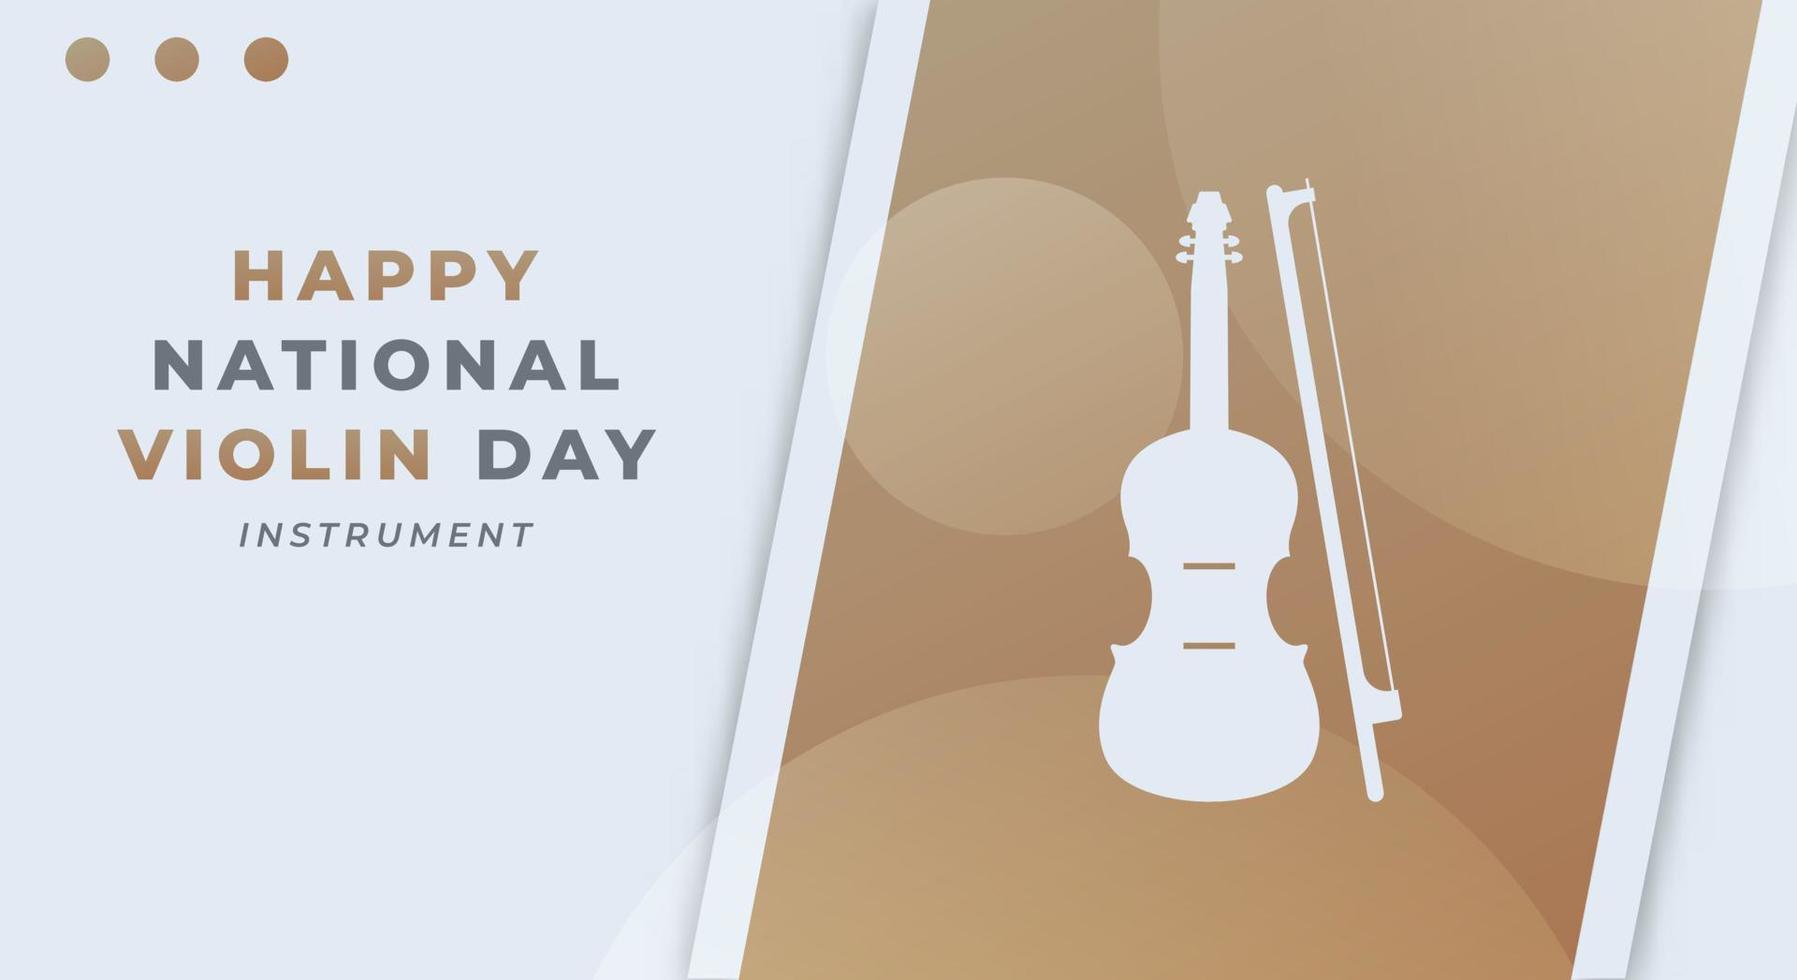 Happy National Violin Day December Celebration Vector Design Illustration. Template for Background, Poster, Banner, Advertising, Greeting Card or Print Design Element